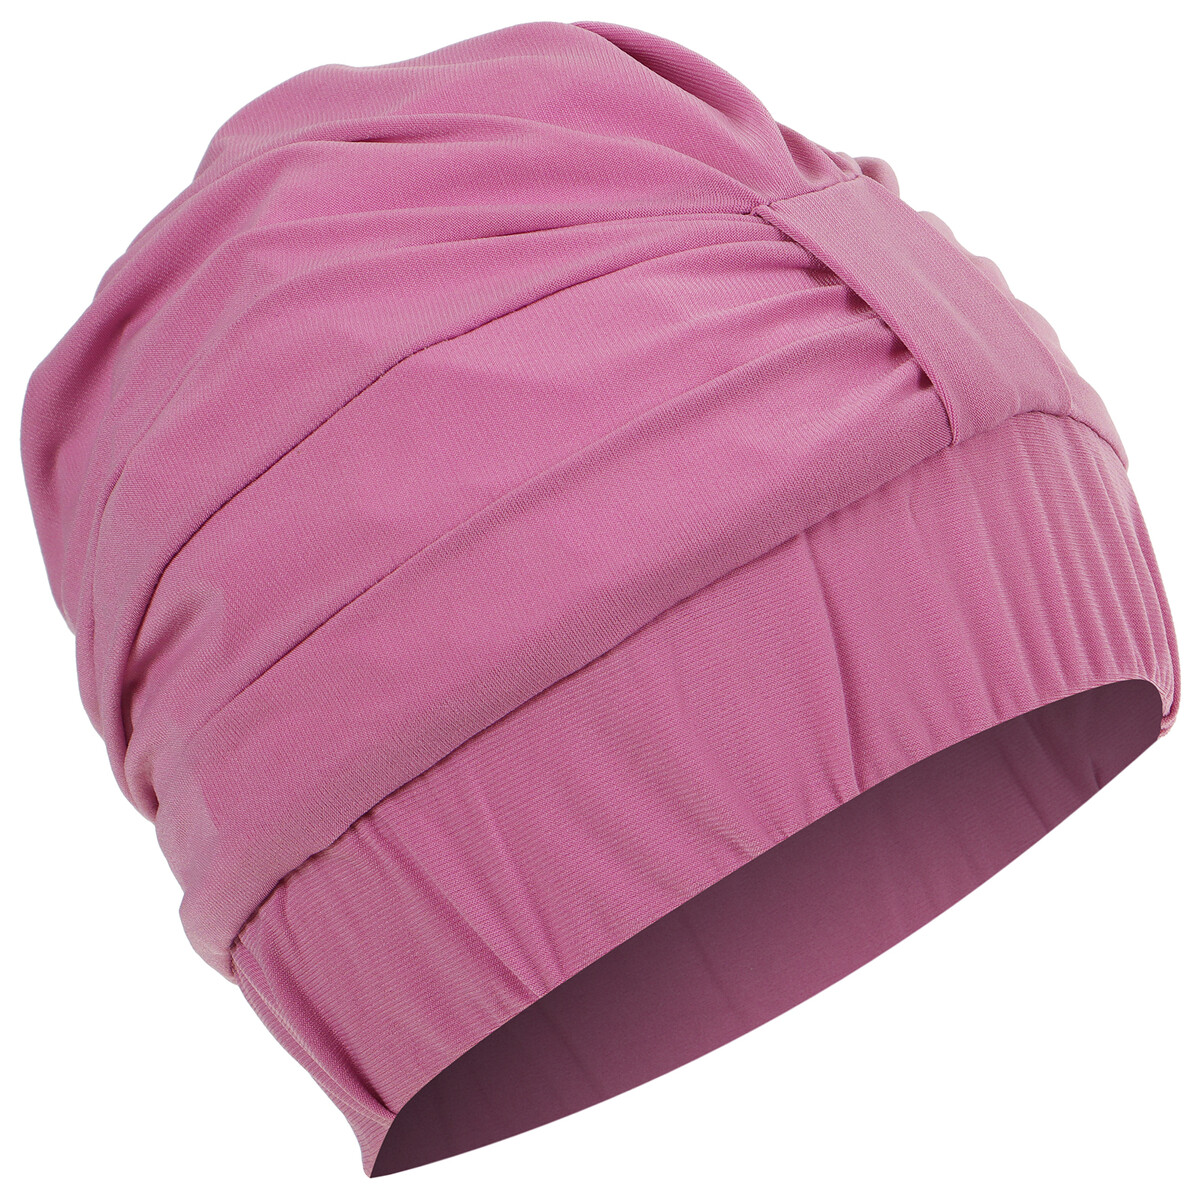 Шапочка для плавания взрослая onlytop, тканевая, обхват 54-60 см, цвет лиловый шапочка для плавания взрослая onlytop тканевая обхват 54 60 см розовый